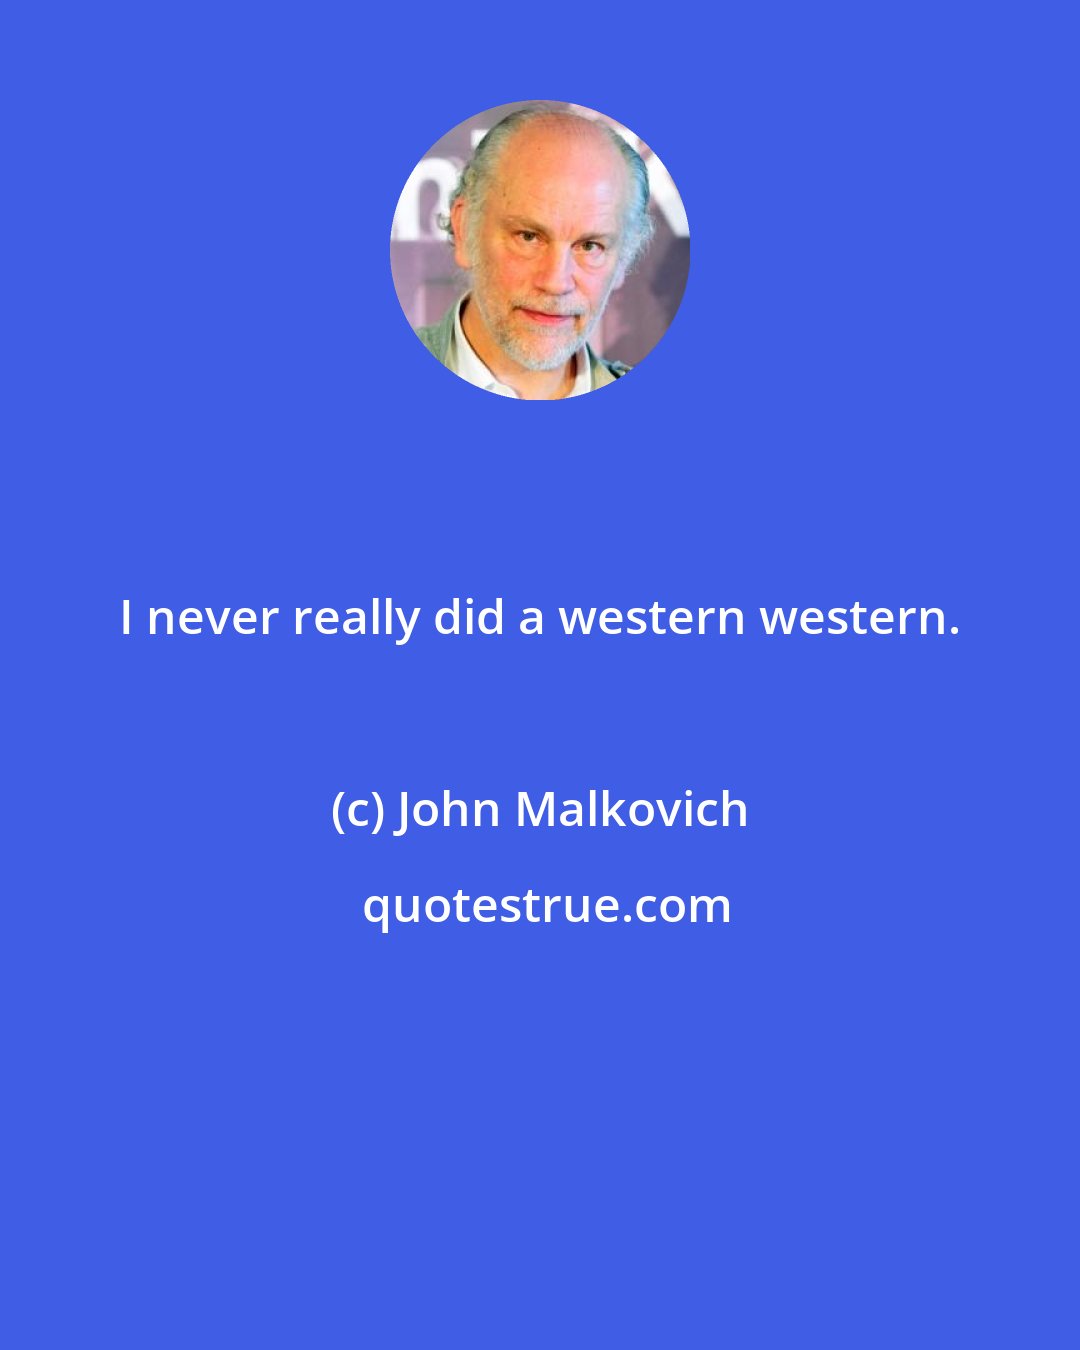 John Malkovich: I never really did a western western.